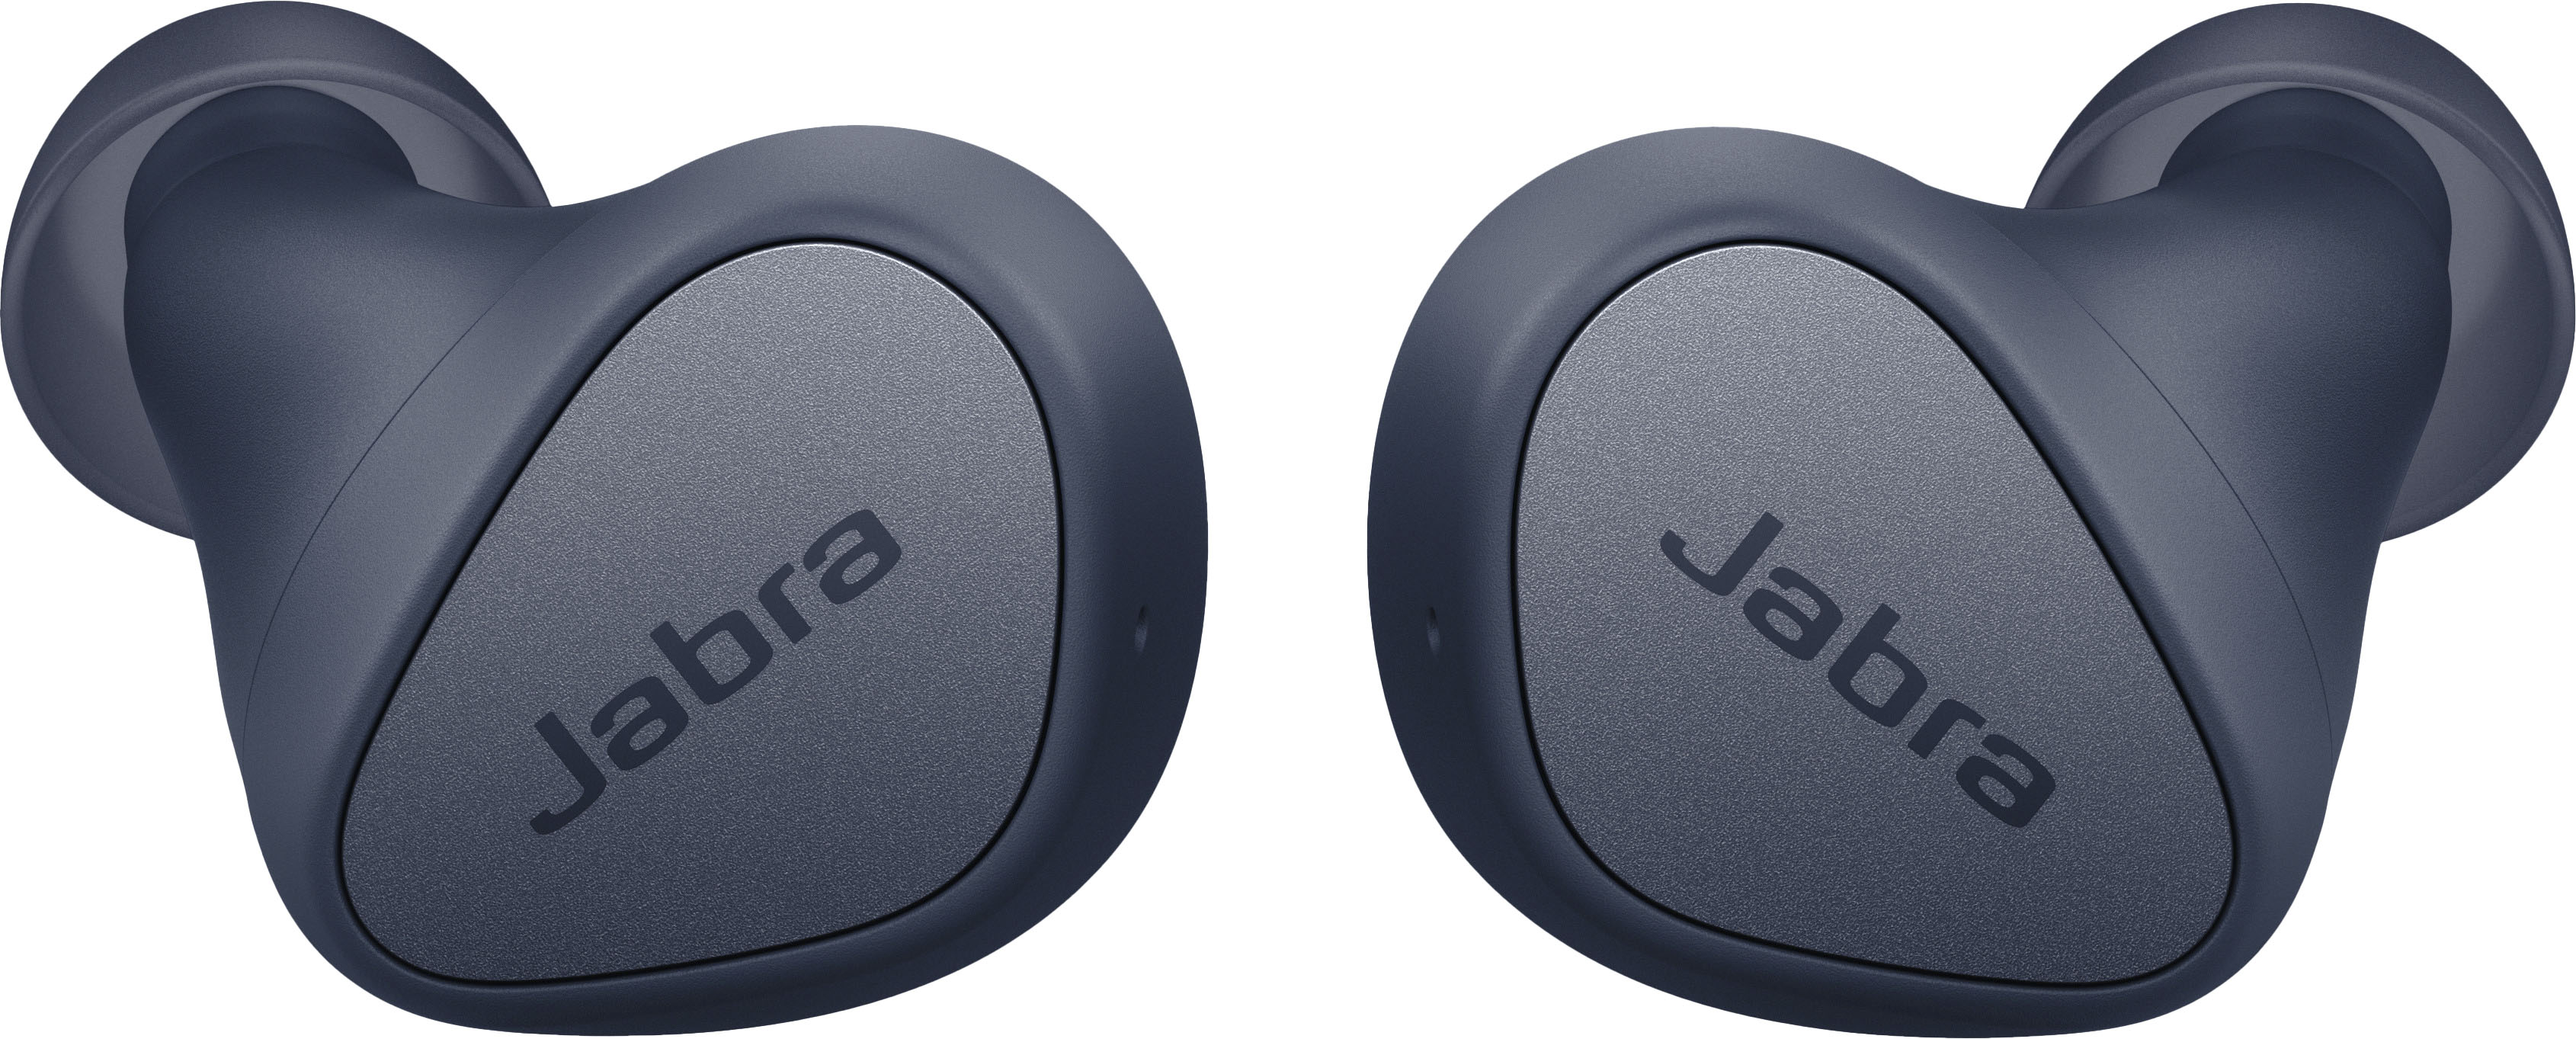 Jabra Elite 3 Headphones Wireless Best - Buy 100-91410001-02 In-Ear True Navy